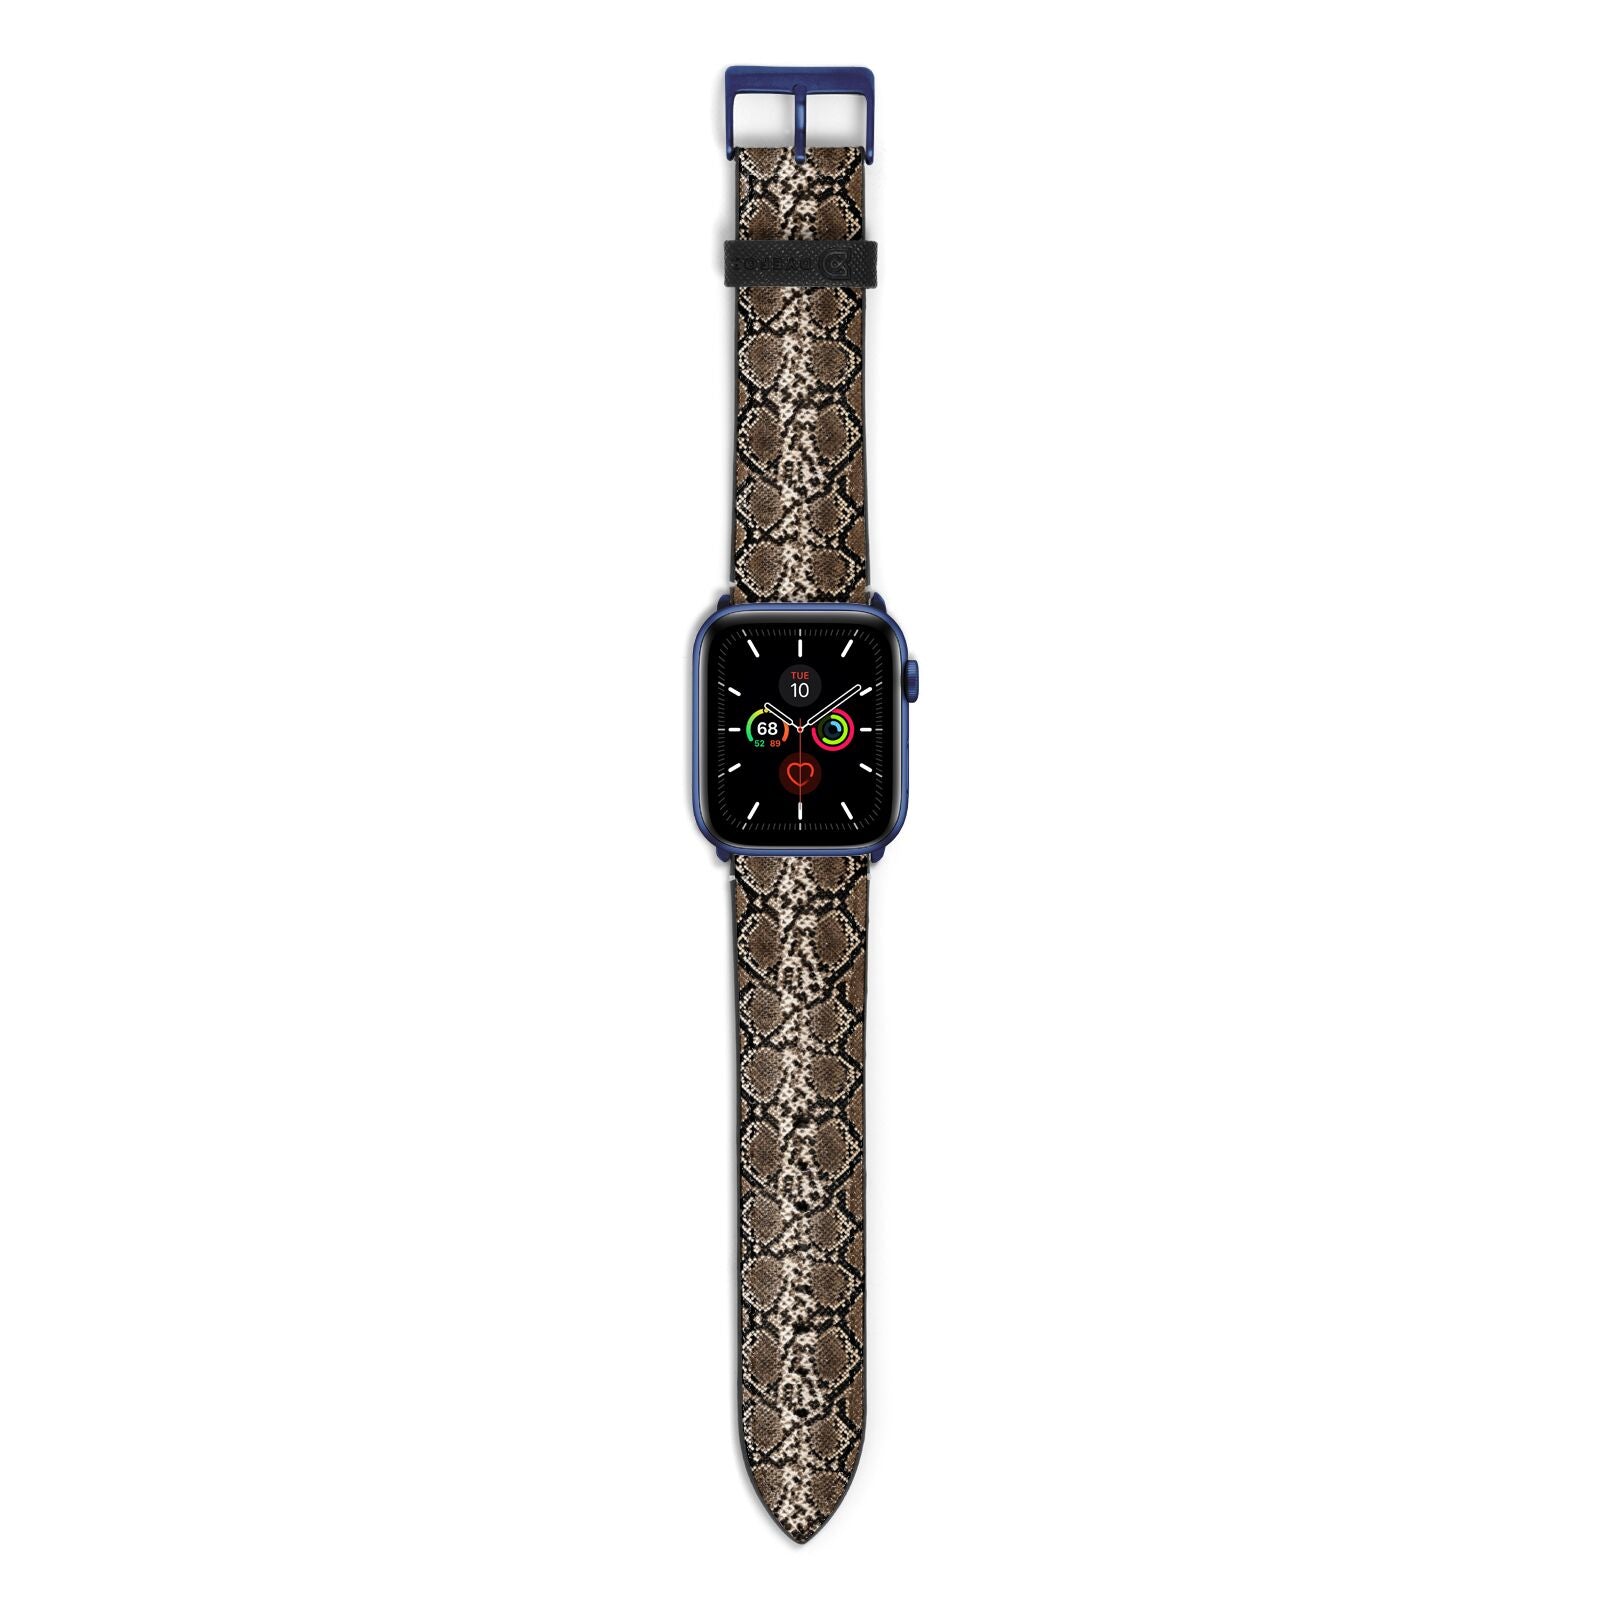 Snakeskin Pattern Apple Watch Strap with Blue Hardware